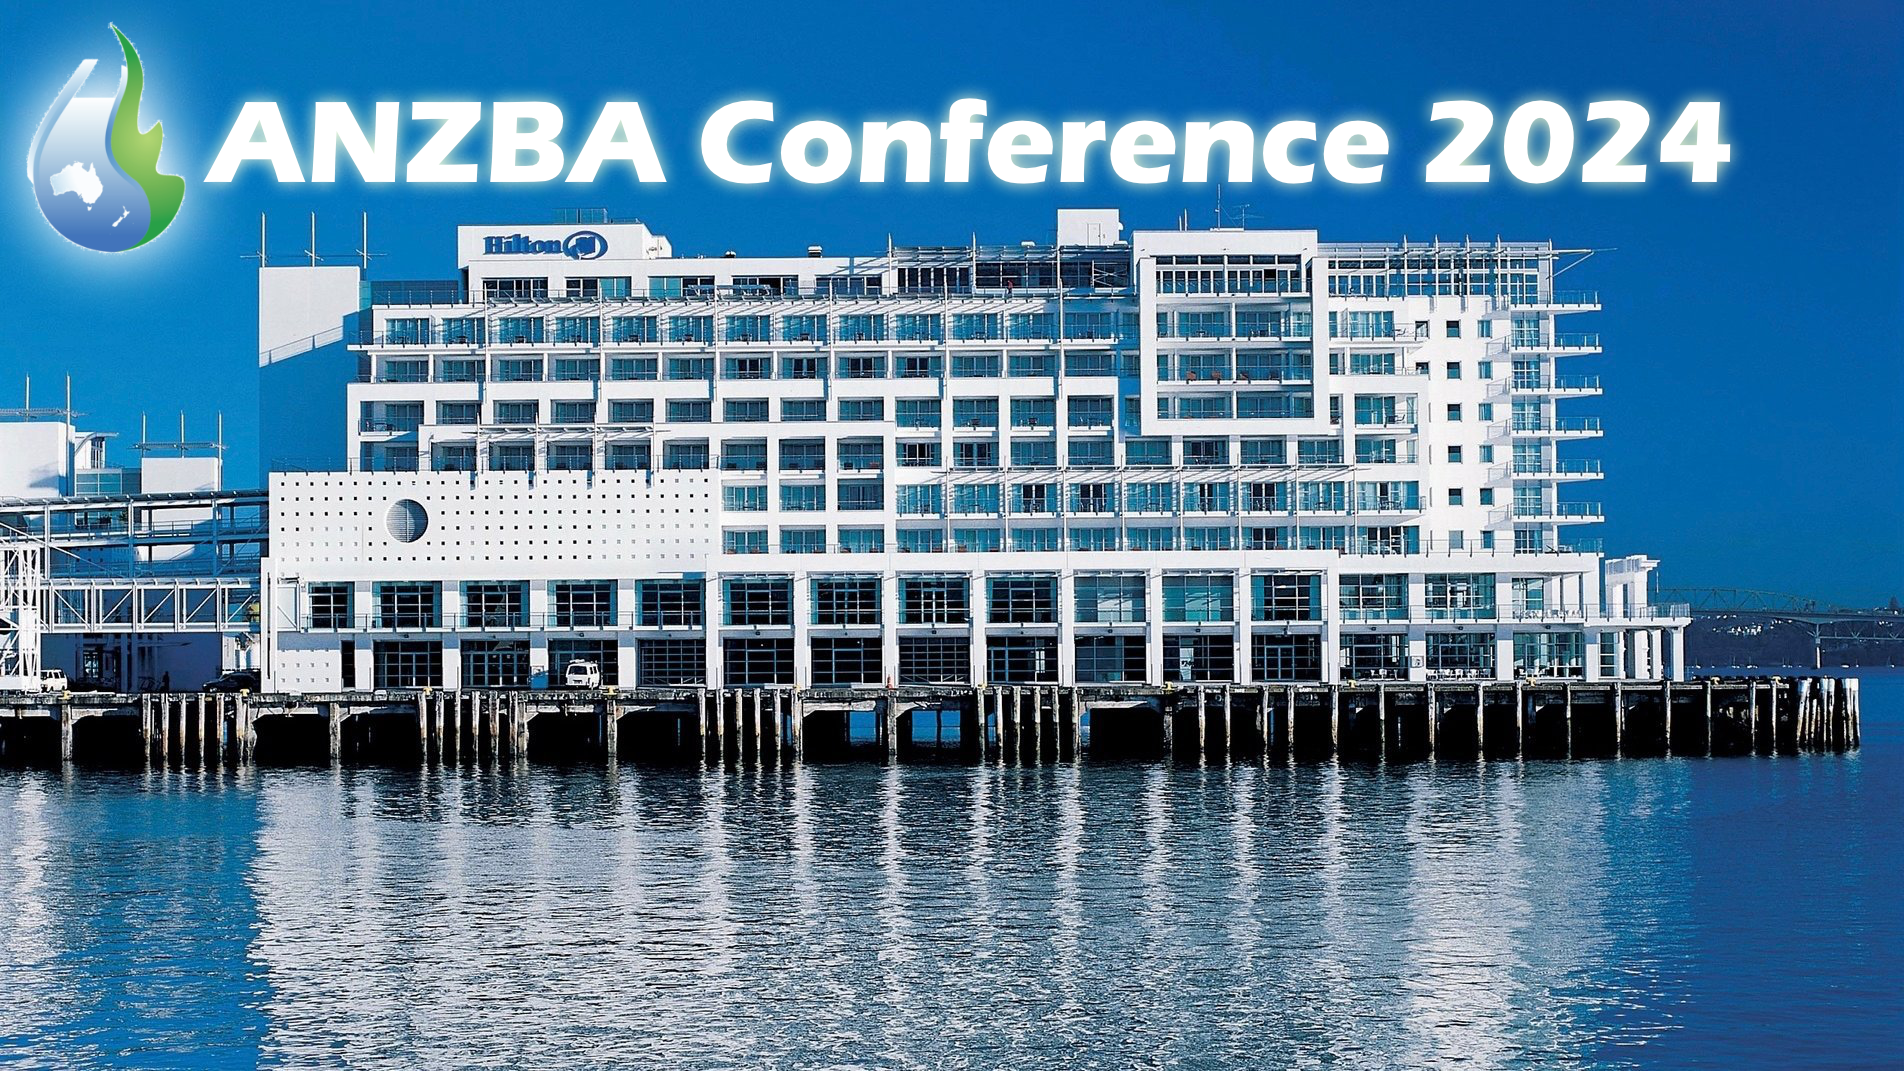 ANZBA Conference 2024